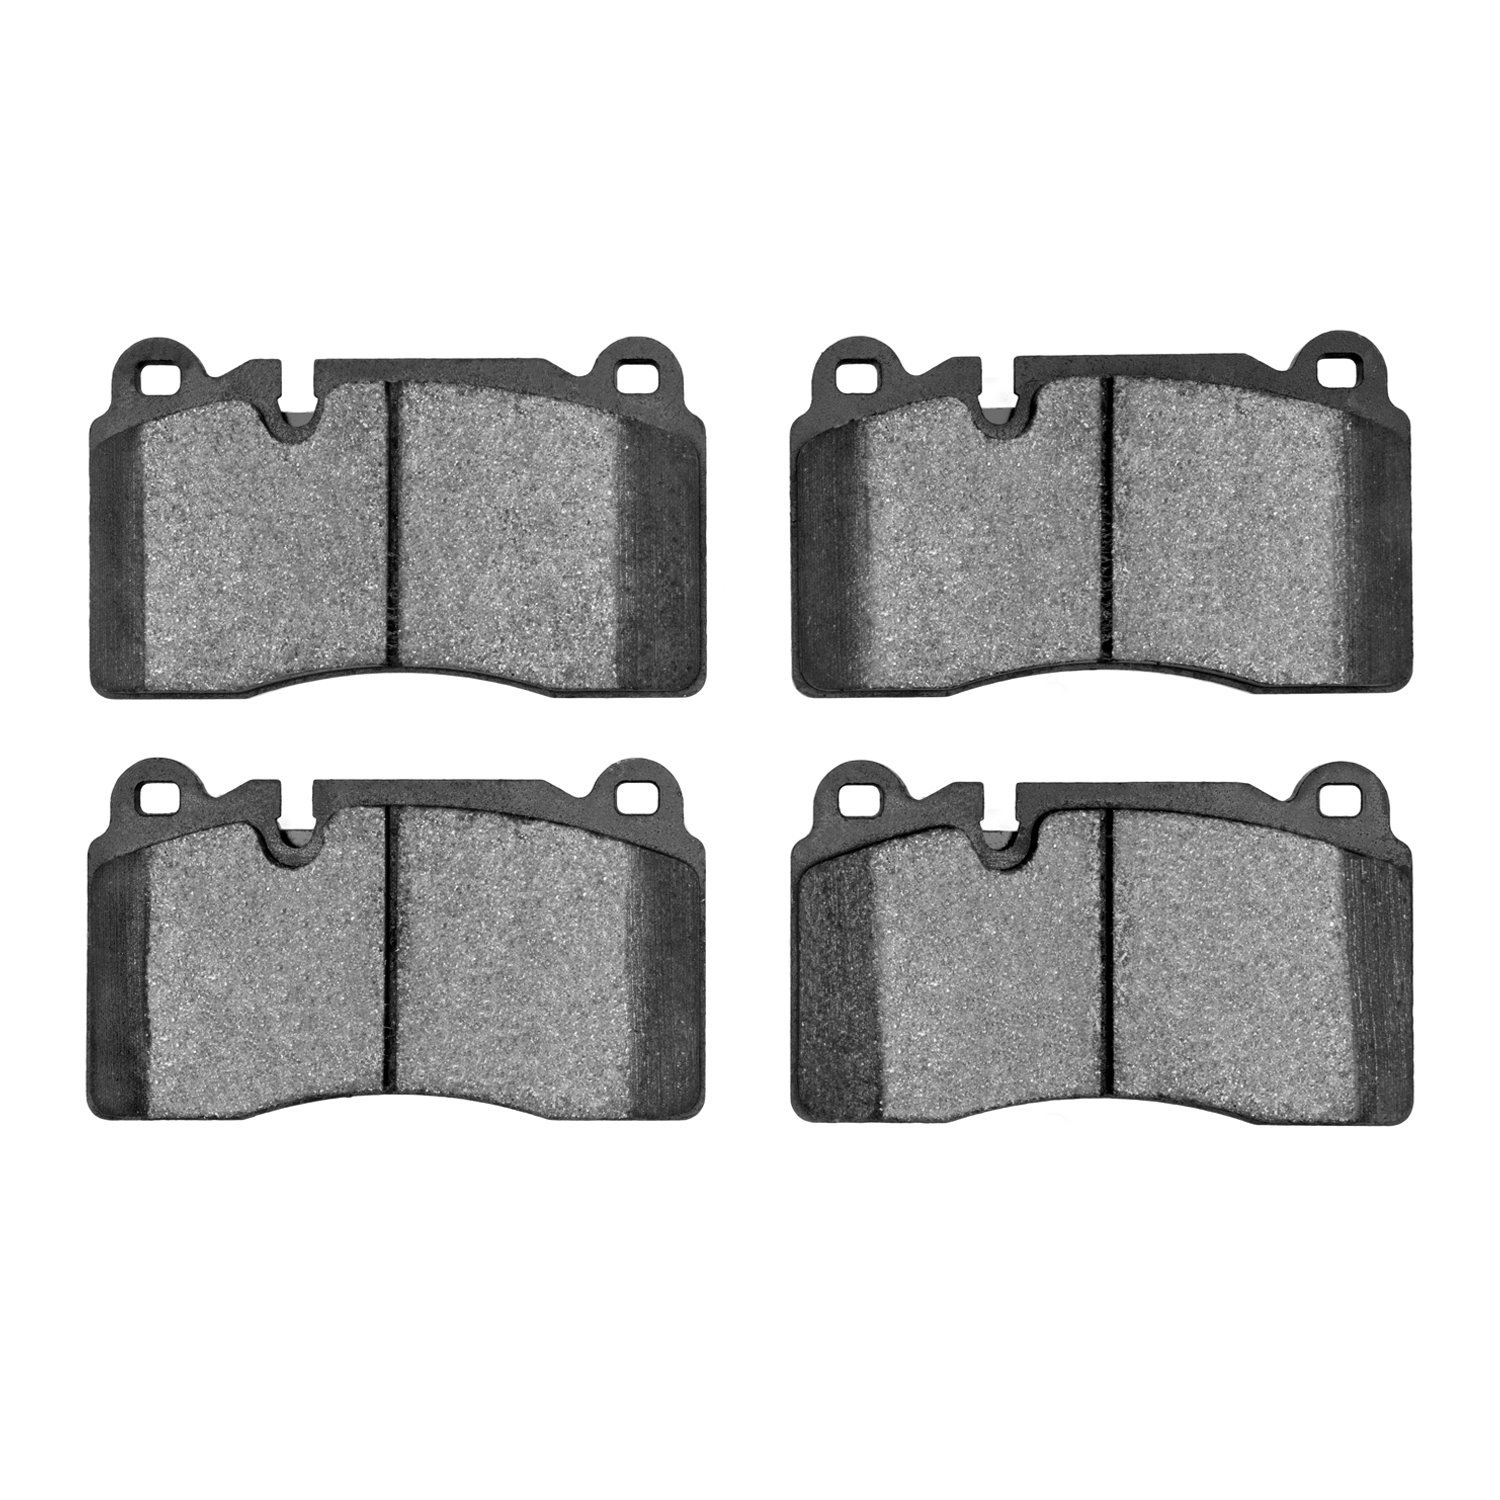 1311-1849-00 3000-Series Semi-Metallic Brake Pads, Fits Select Multiple Makes/Models, Position: Rear